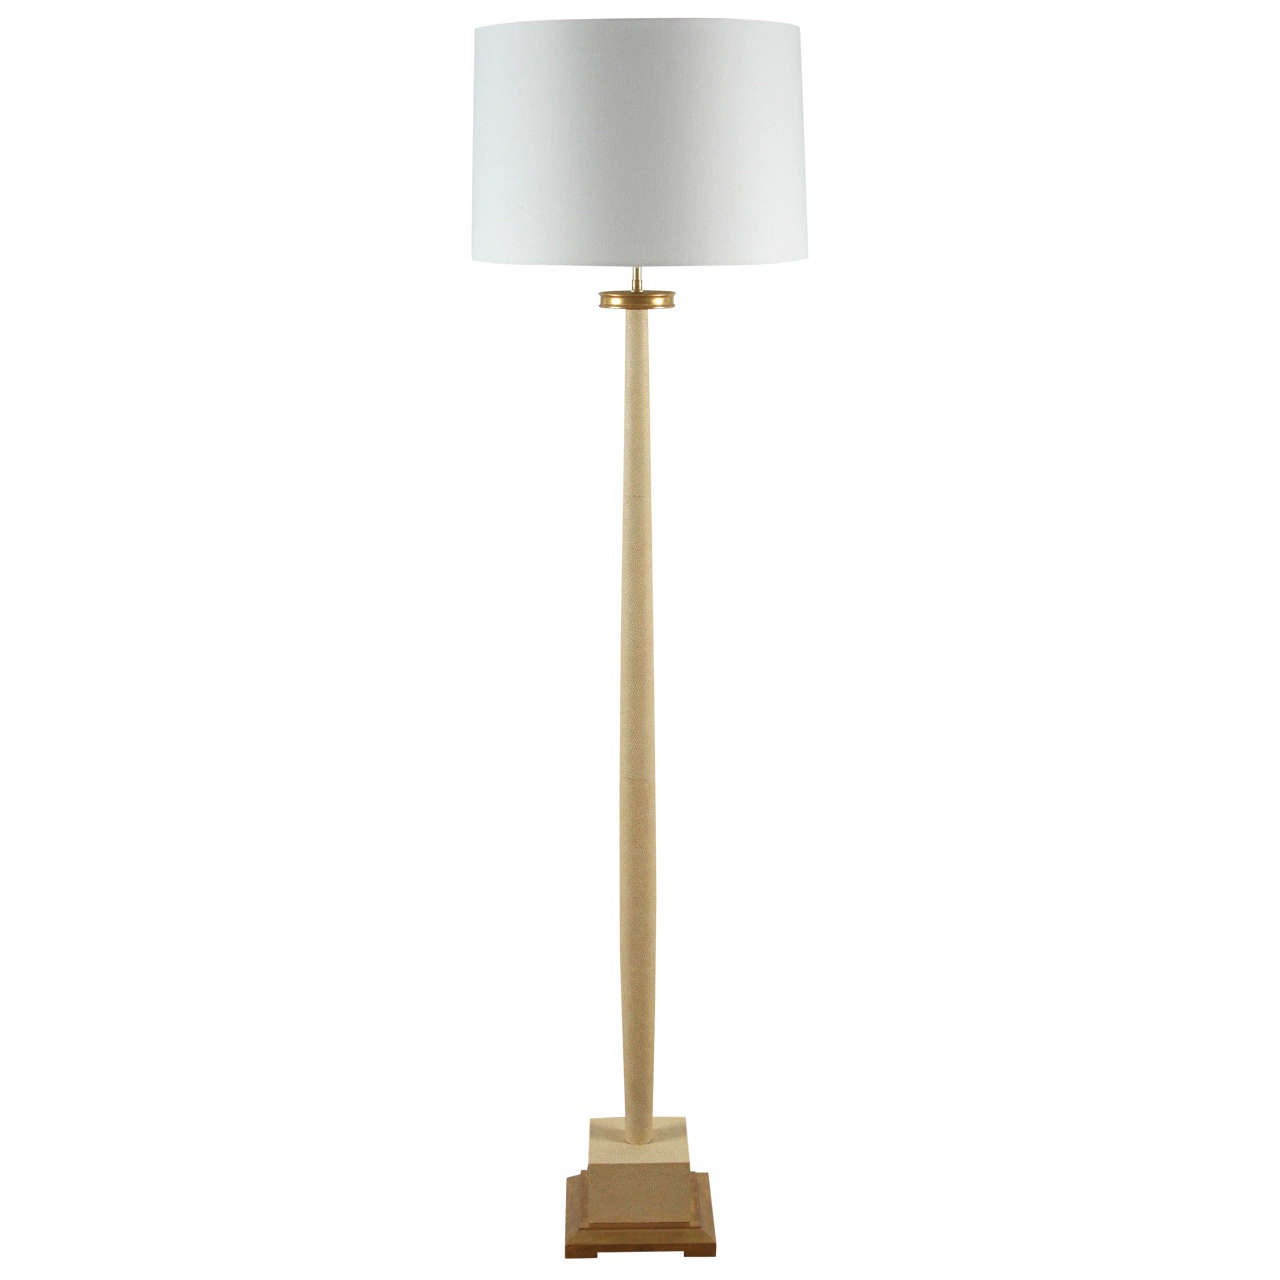 Paul Marra Faux Shagreen Floor Lamp 1940s Inspired, Cream For Sale